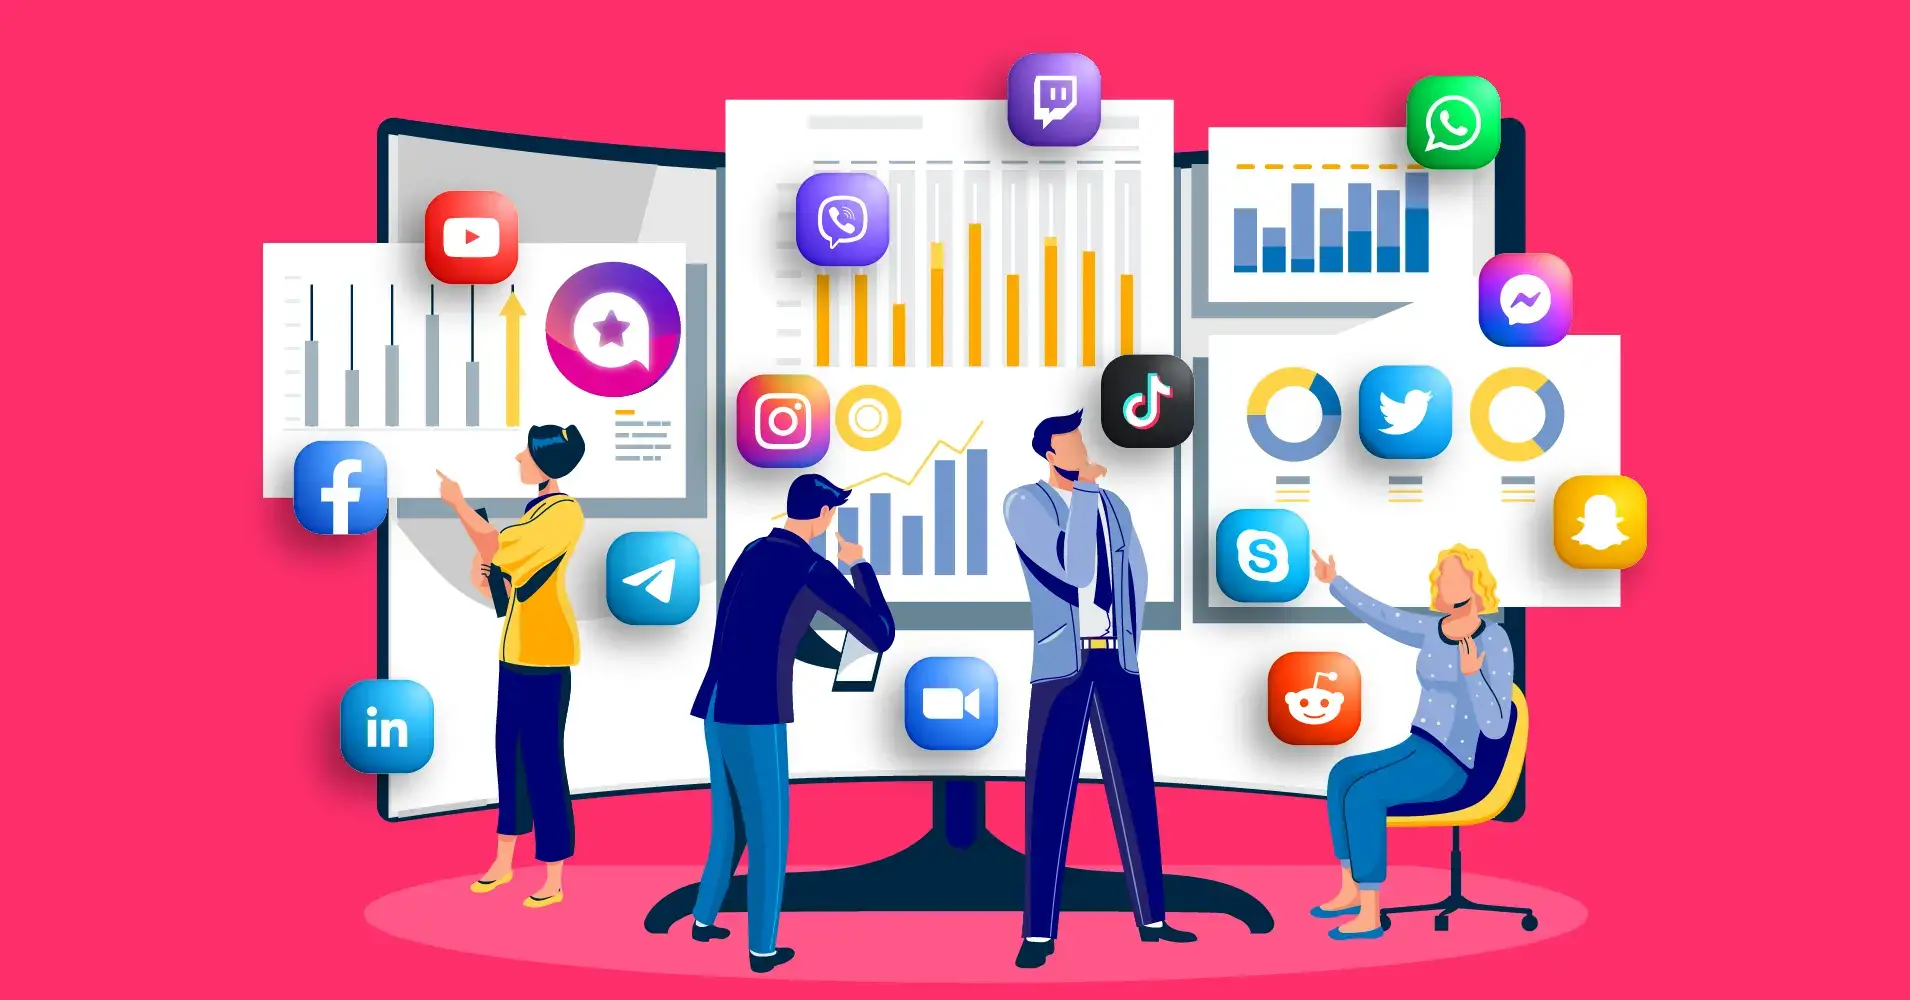 Social Media Marketing Characteristics